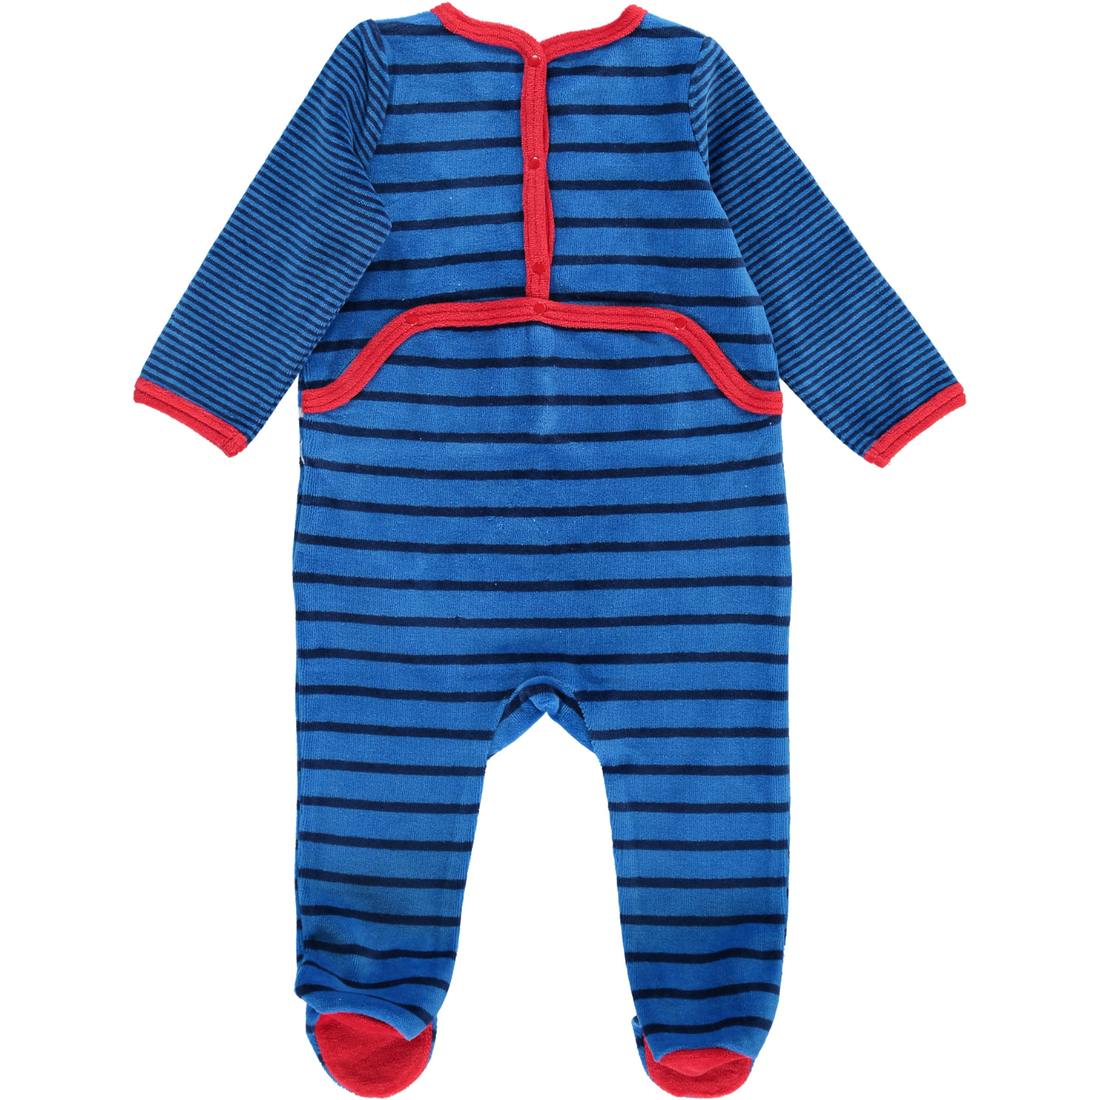 Baby boys' velour sleepsuit